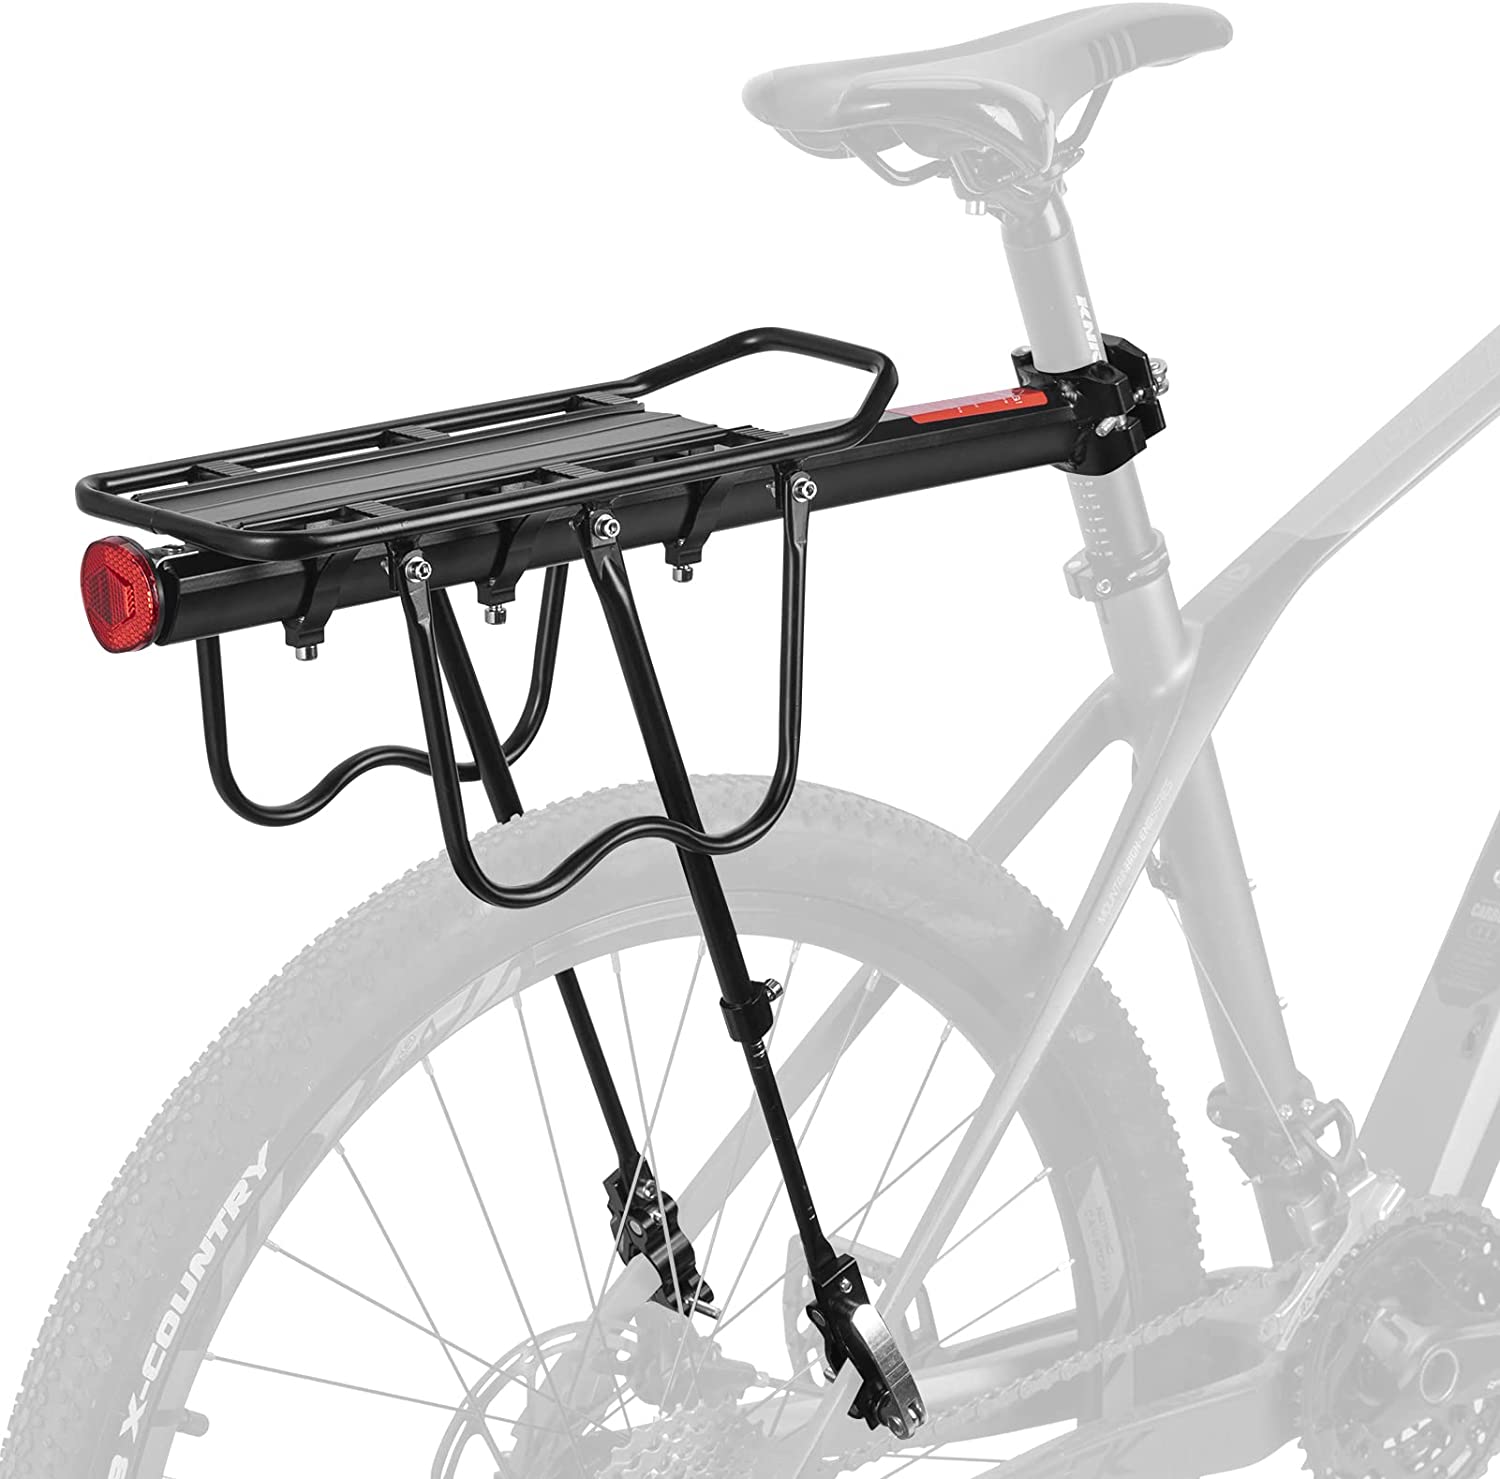 ROCKBROS Rear Bike Bicycle Cargo Rack Aluminum Alloy 115 lbs Capacity Black